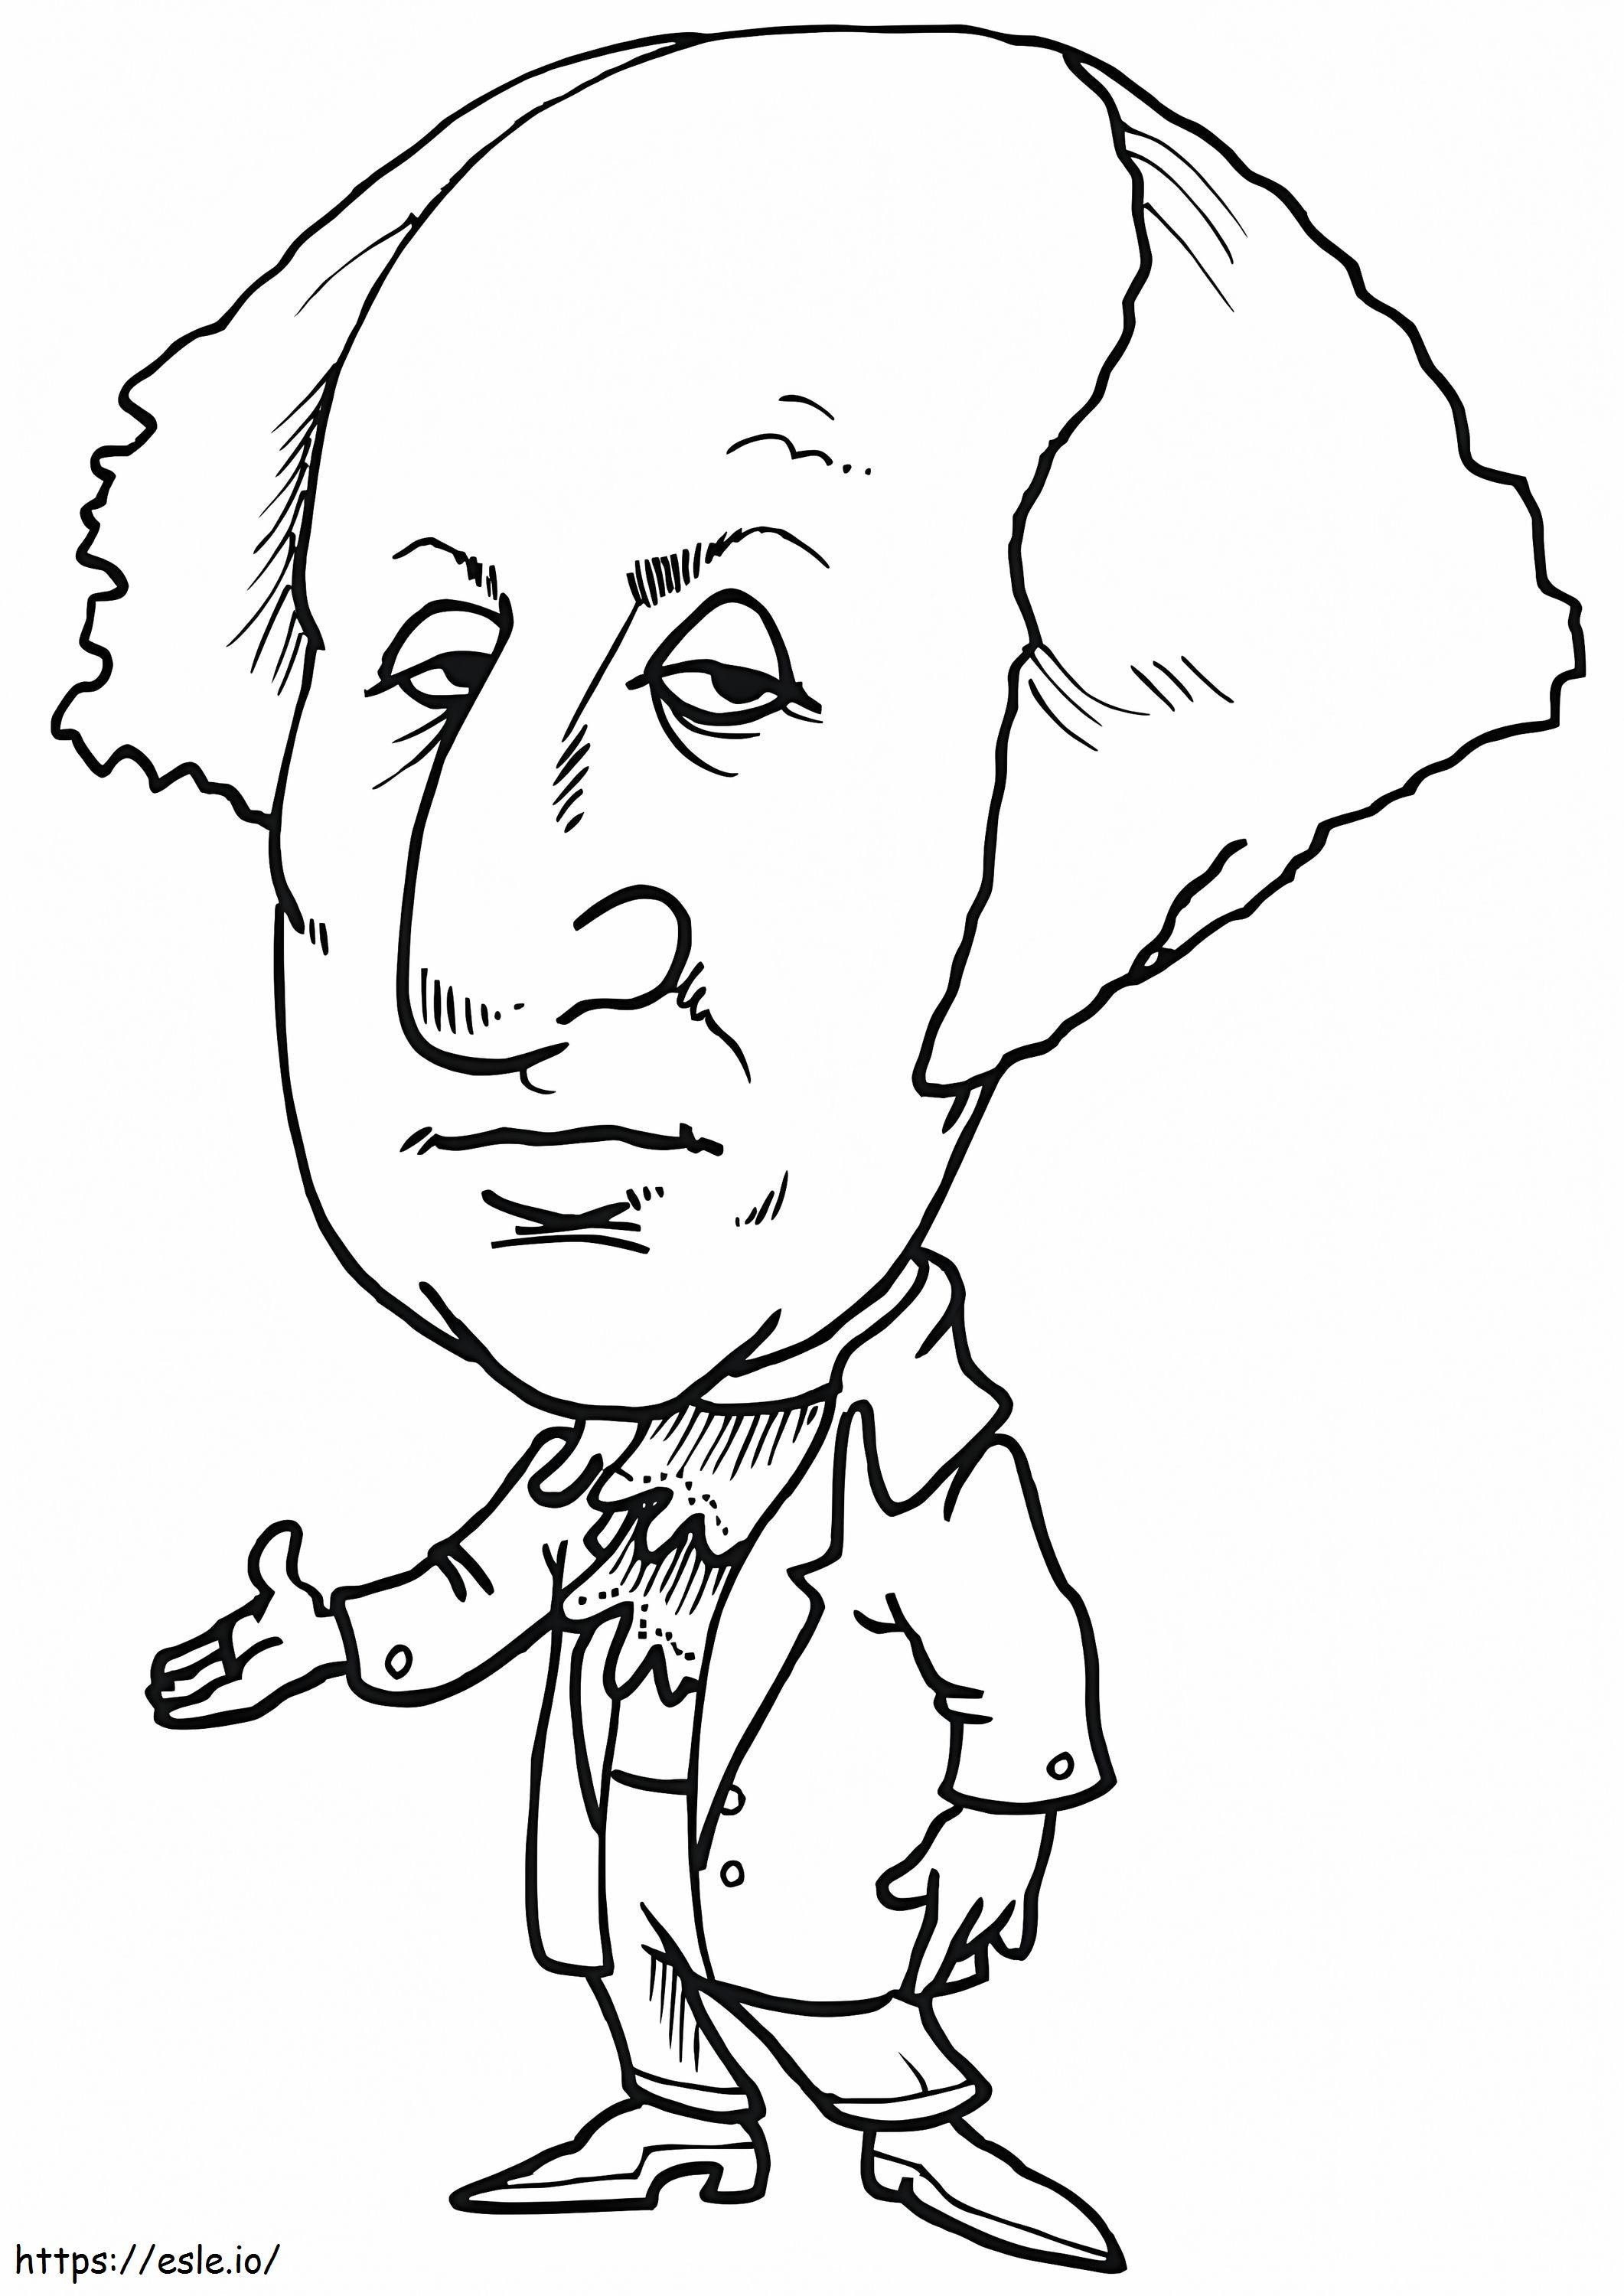 George Washington-Karikatur ausmalbilder